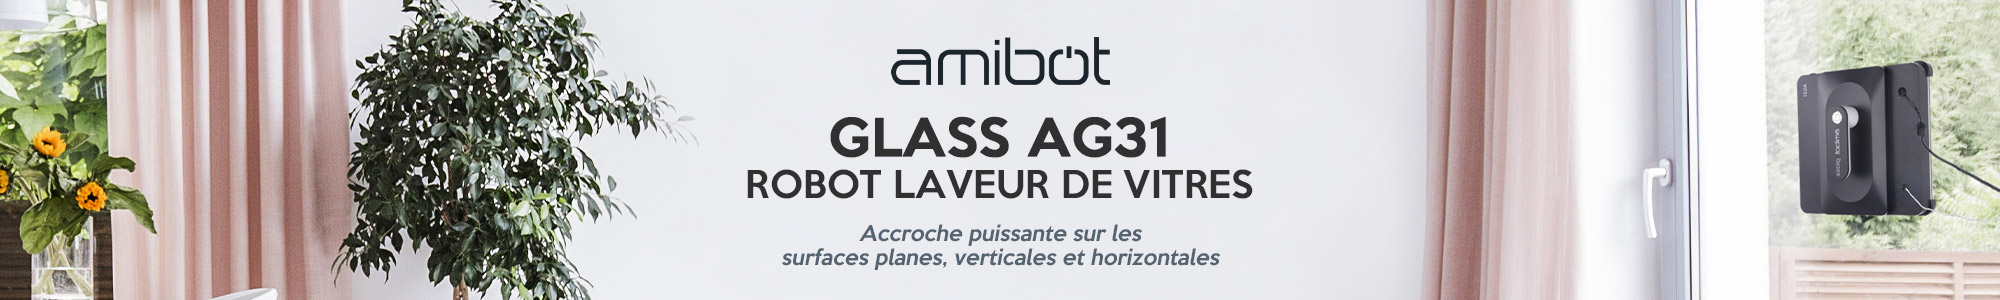 Amibot Glass AG30